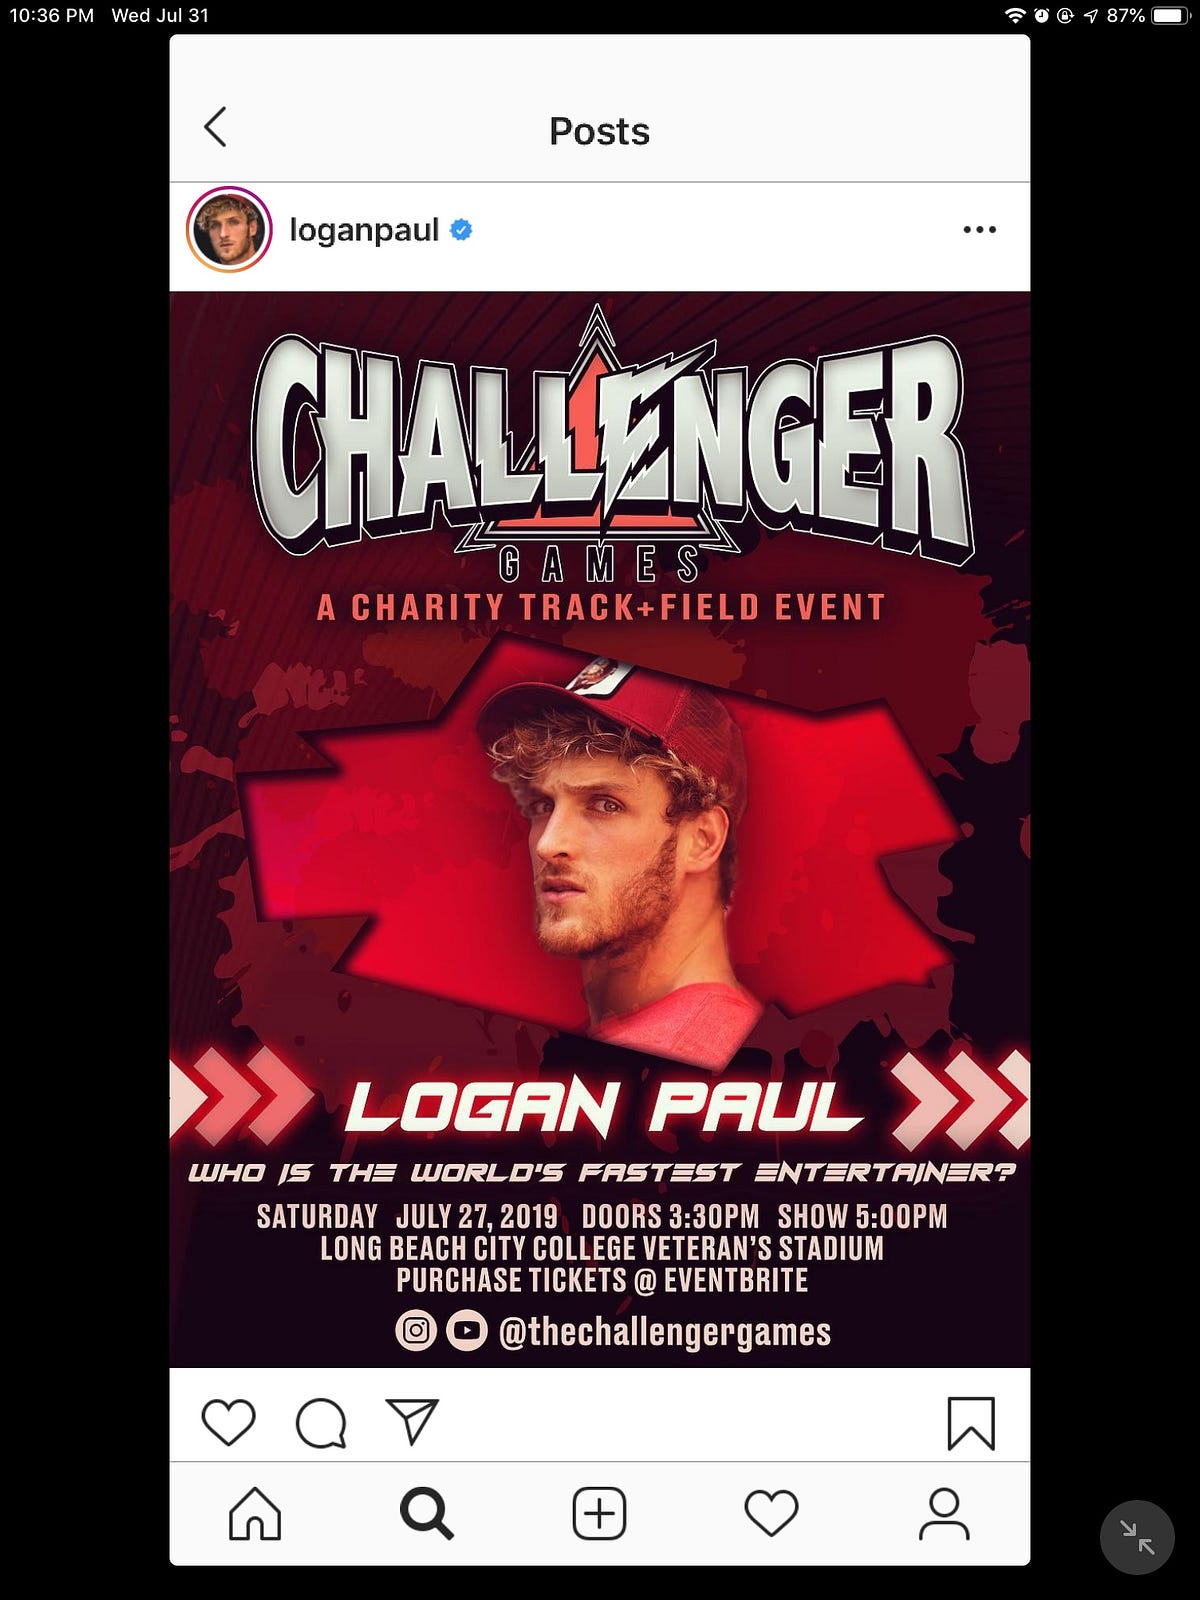 Challenger Games uses Social Media Influencer Logan Paul to Raise